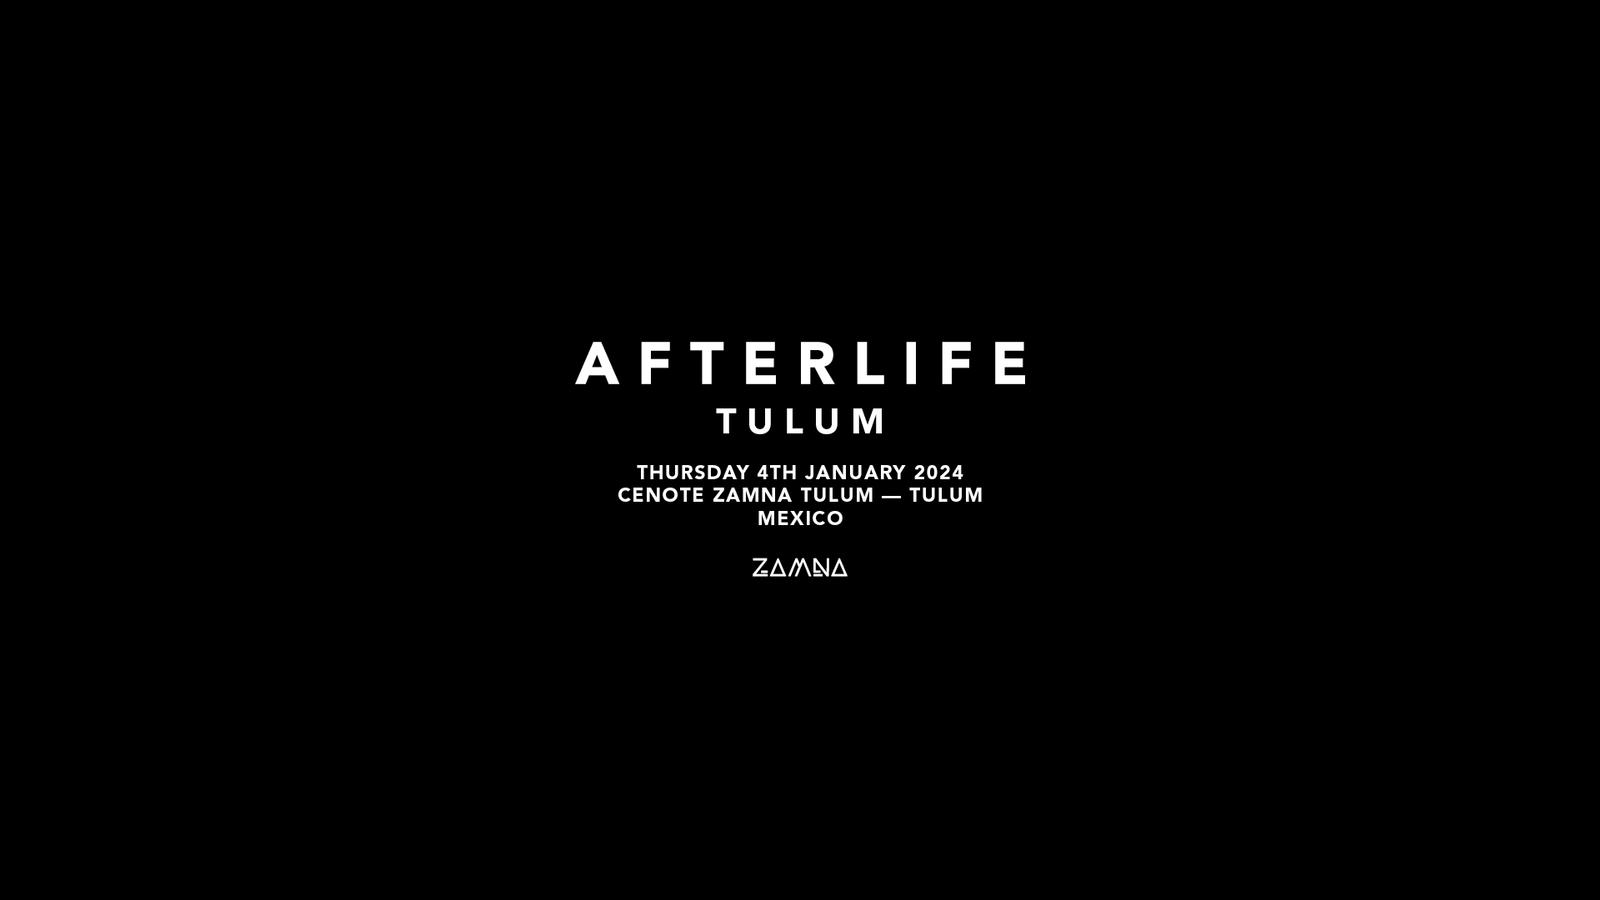 Afterlife Tulum 2023 at Zamna Tulum, Tulum